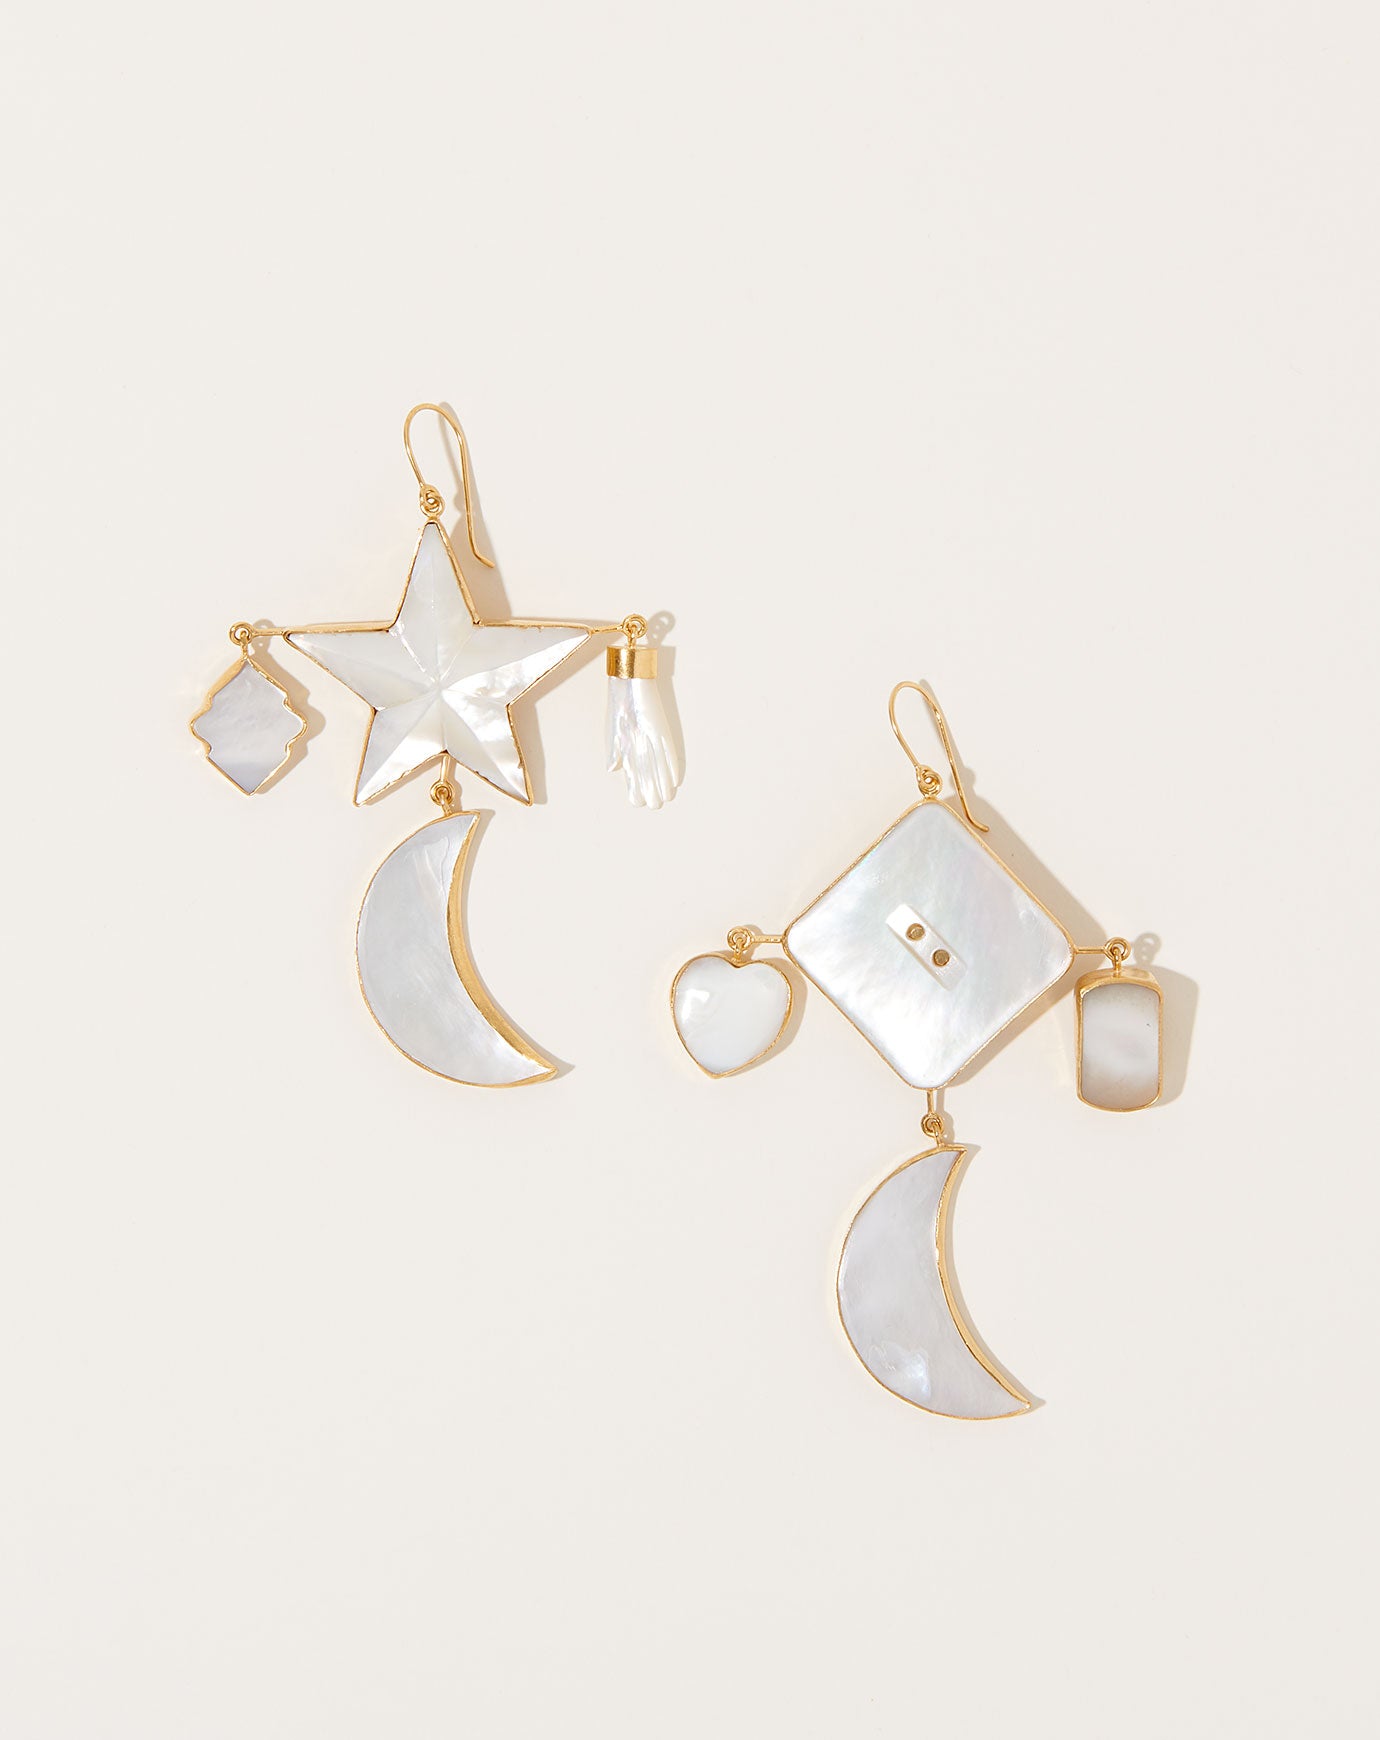 Grainne Morton Moon and Star Earrings